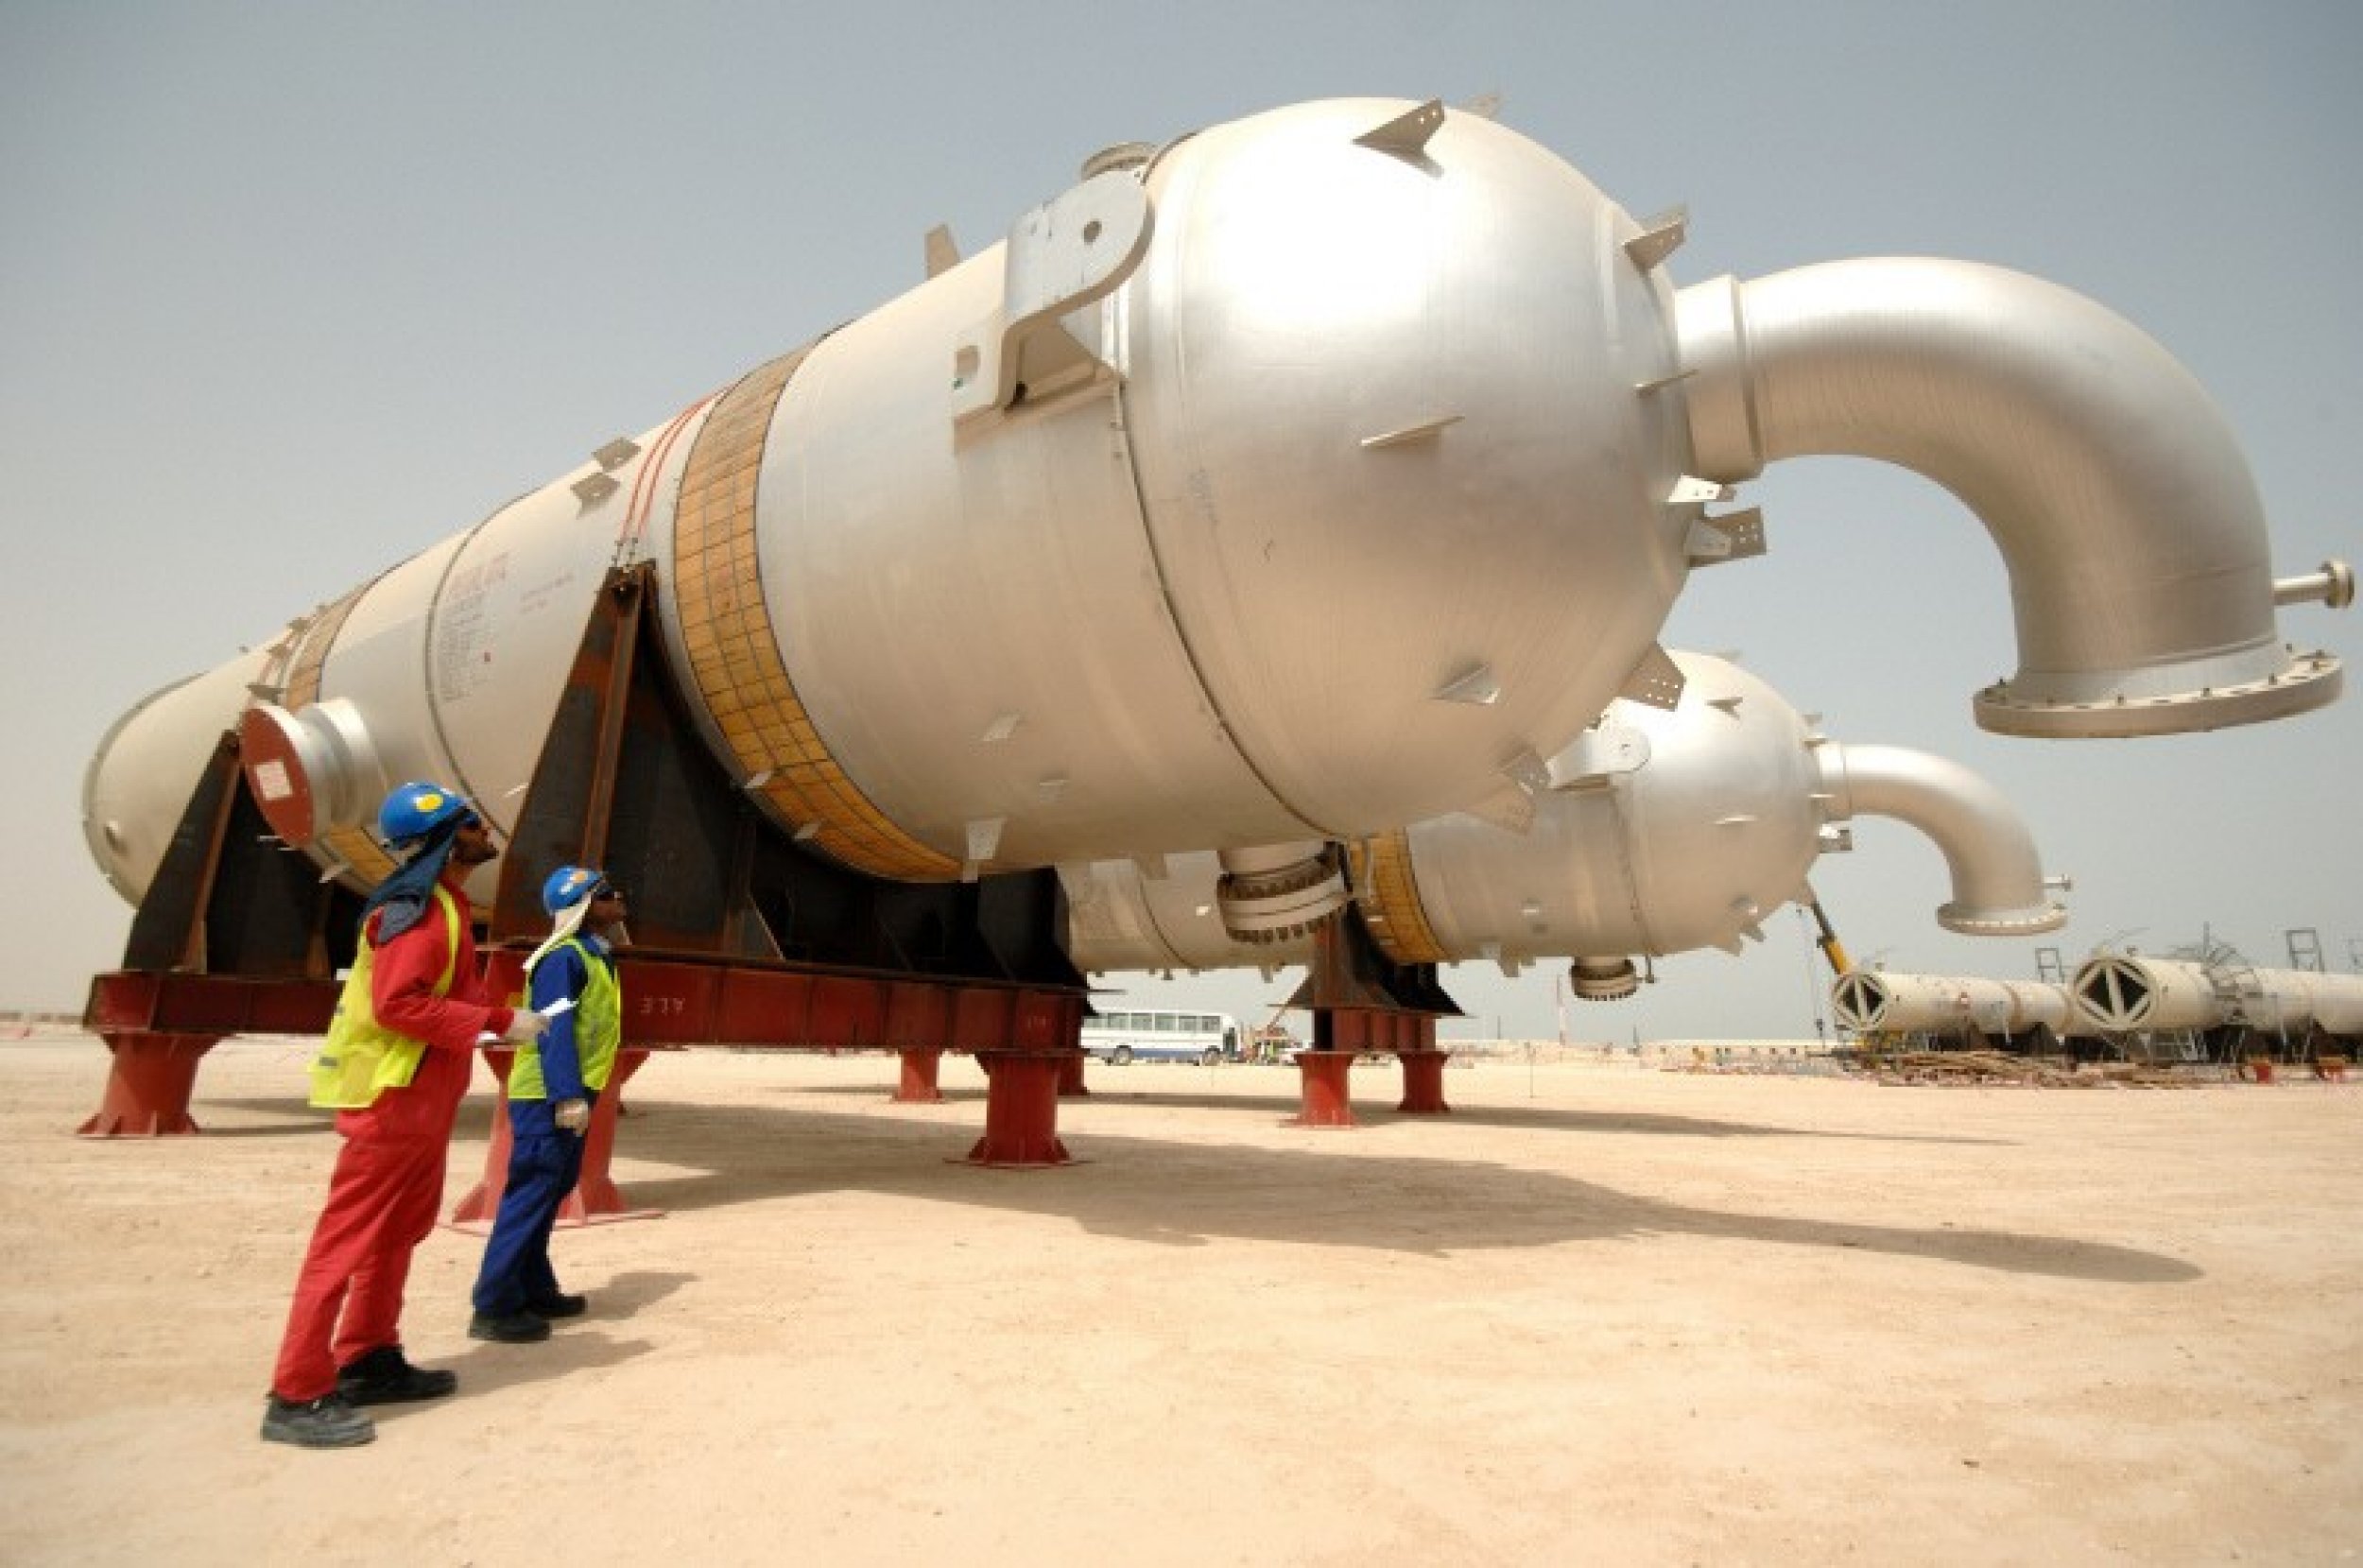 Tonnes of equipment is unloaded in Qatar